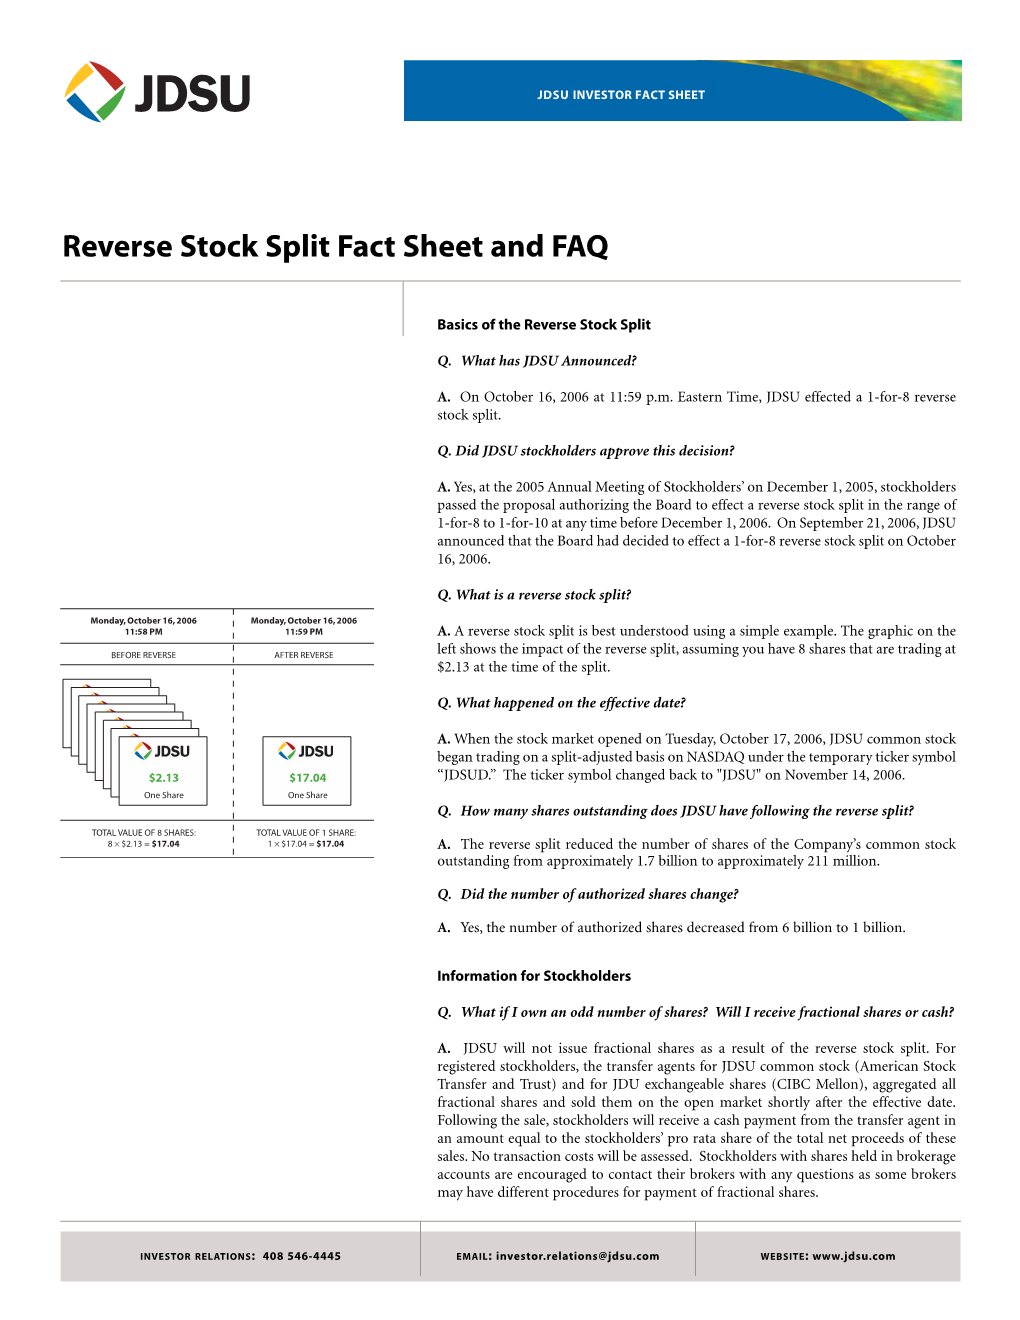 Reverse Stock Split Fact Sheet and FAQ